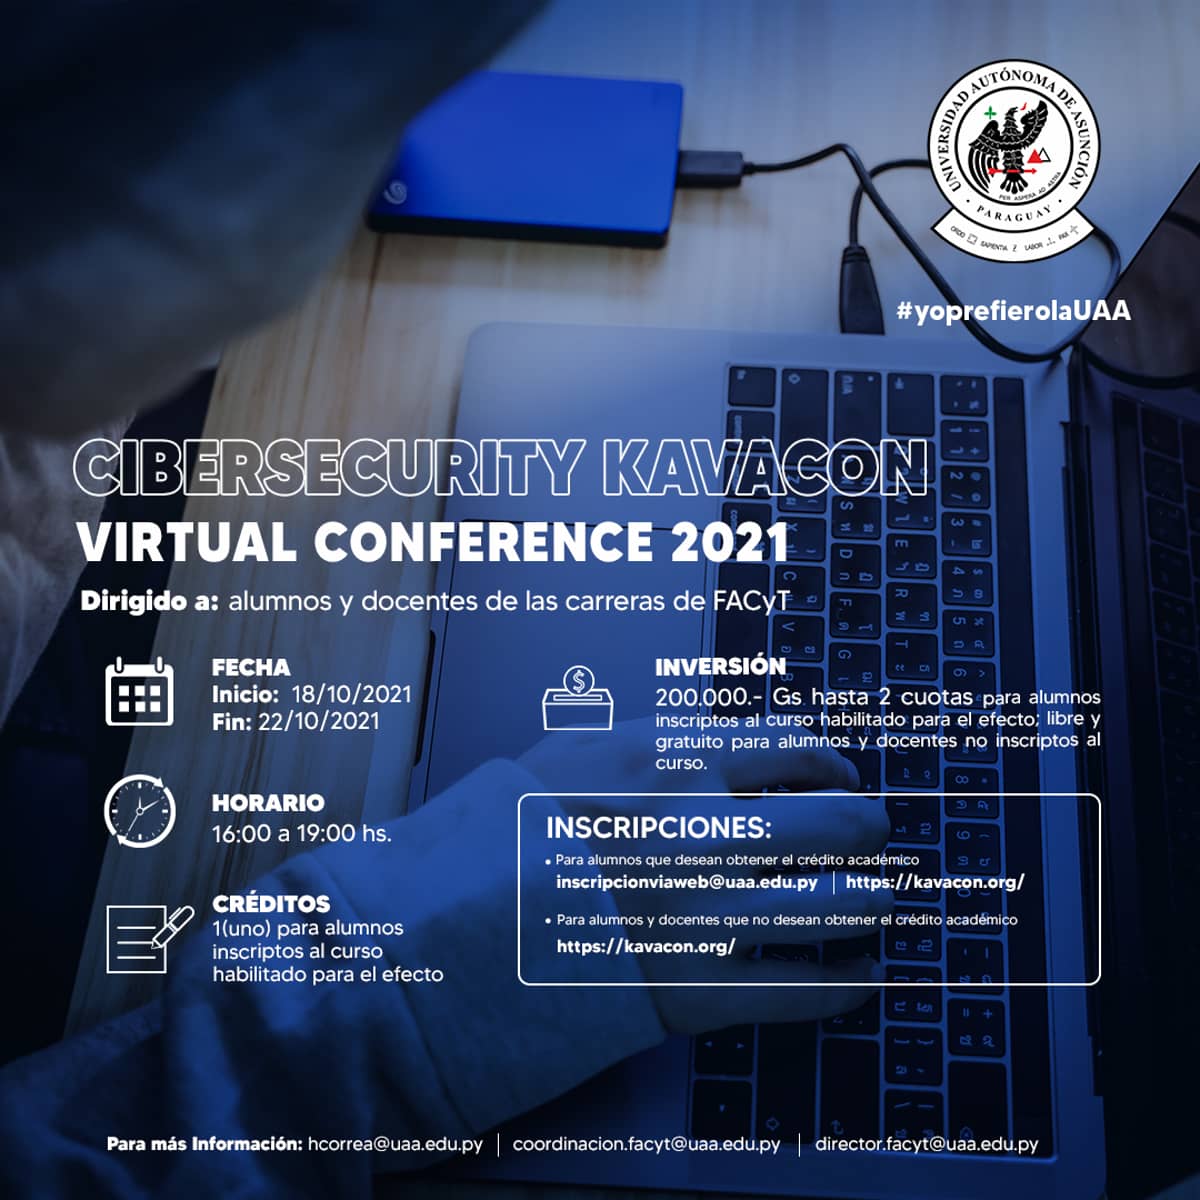 Cibersecurity KavaCon - Virtual Conference 2021